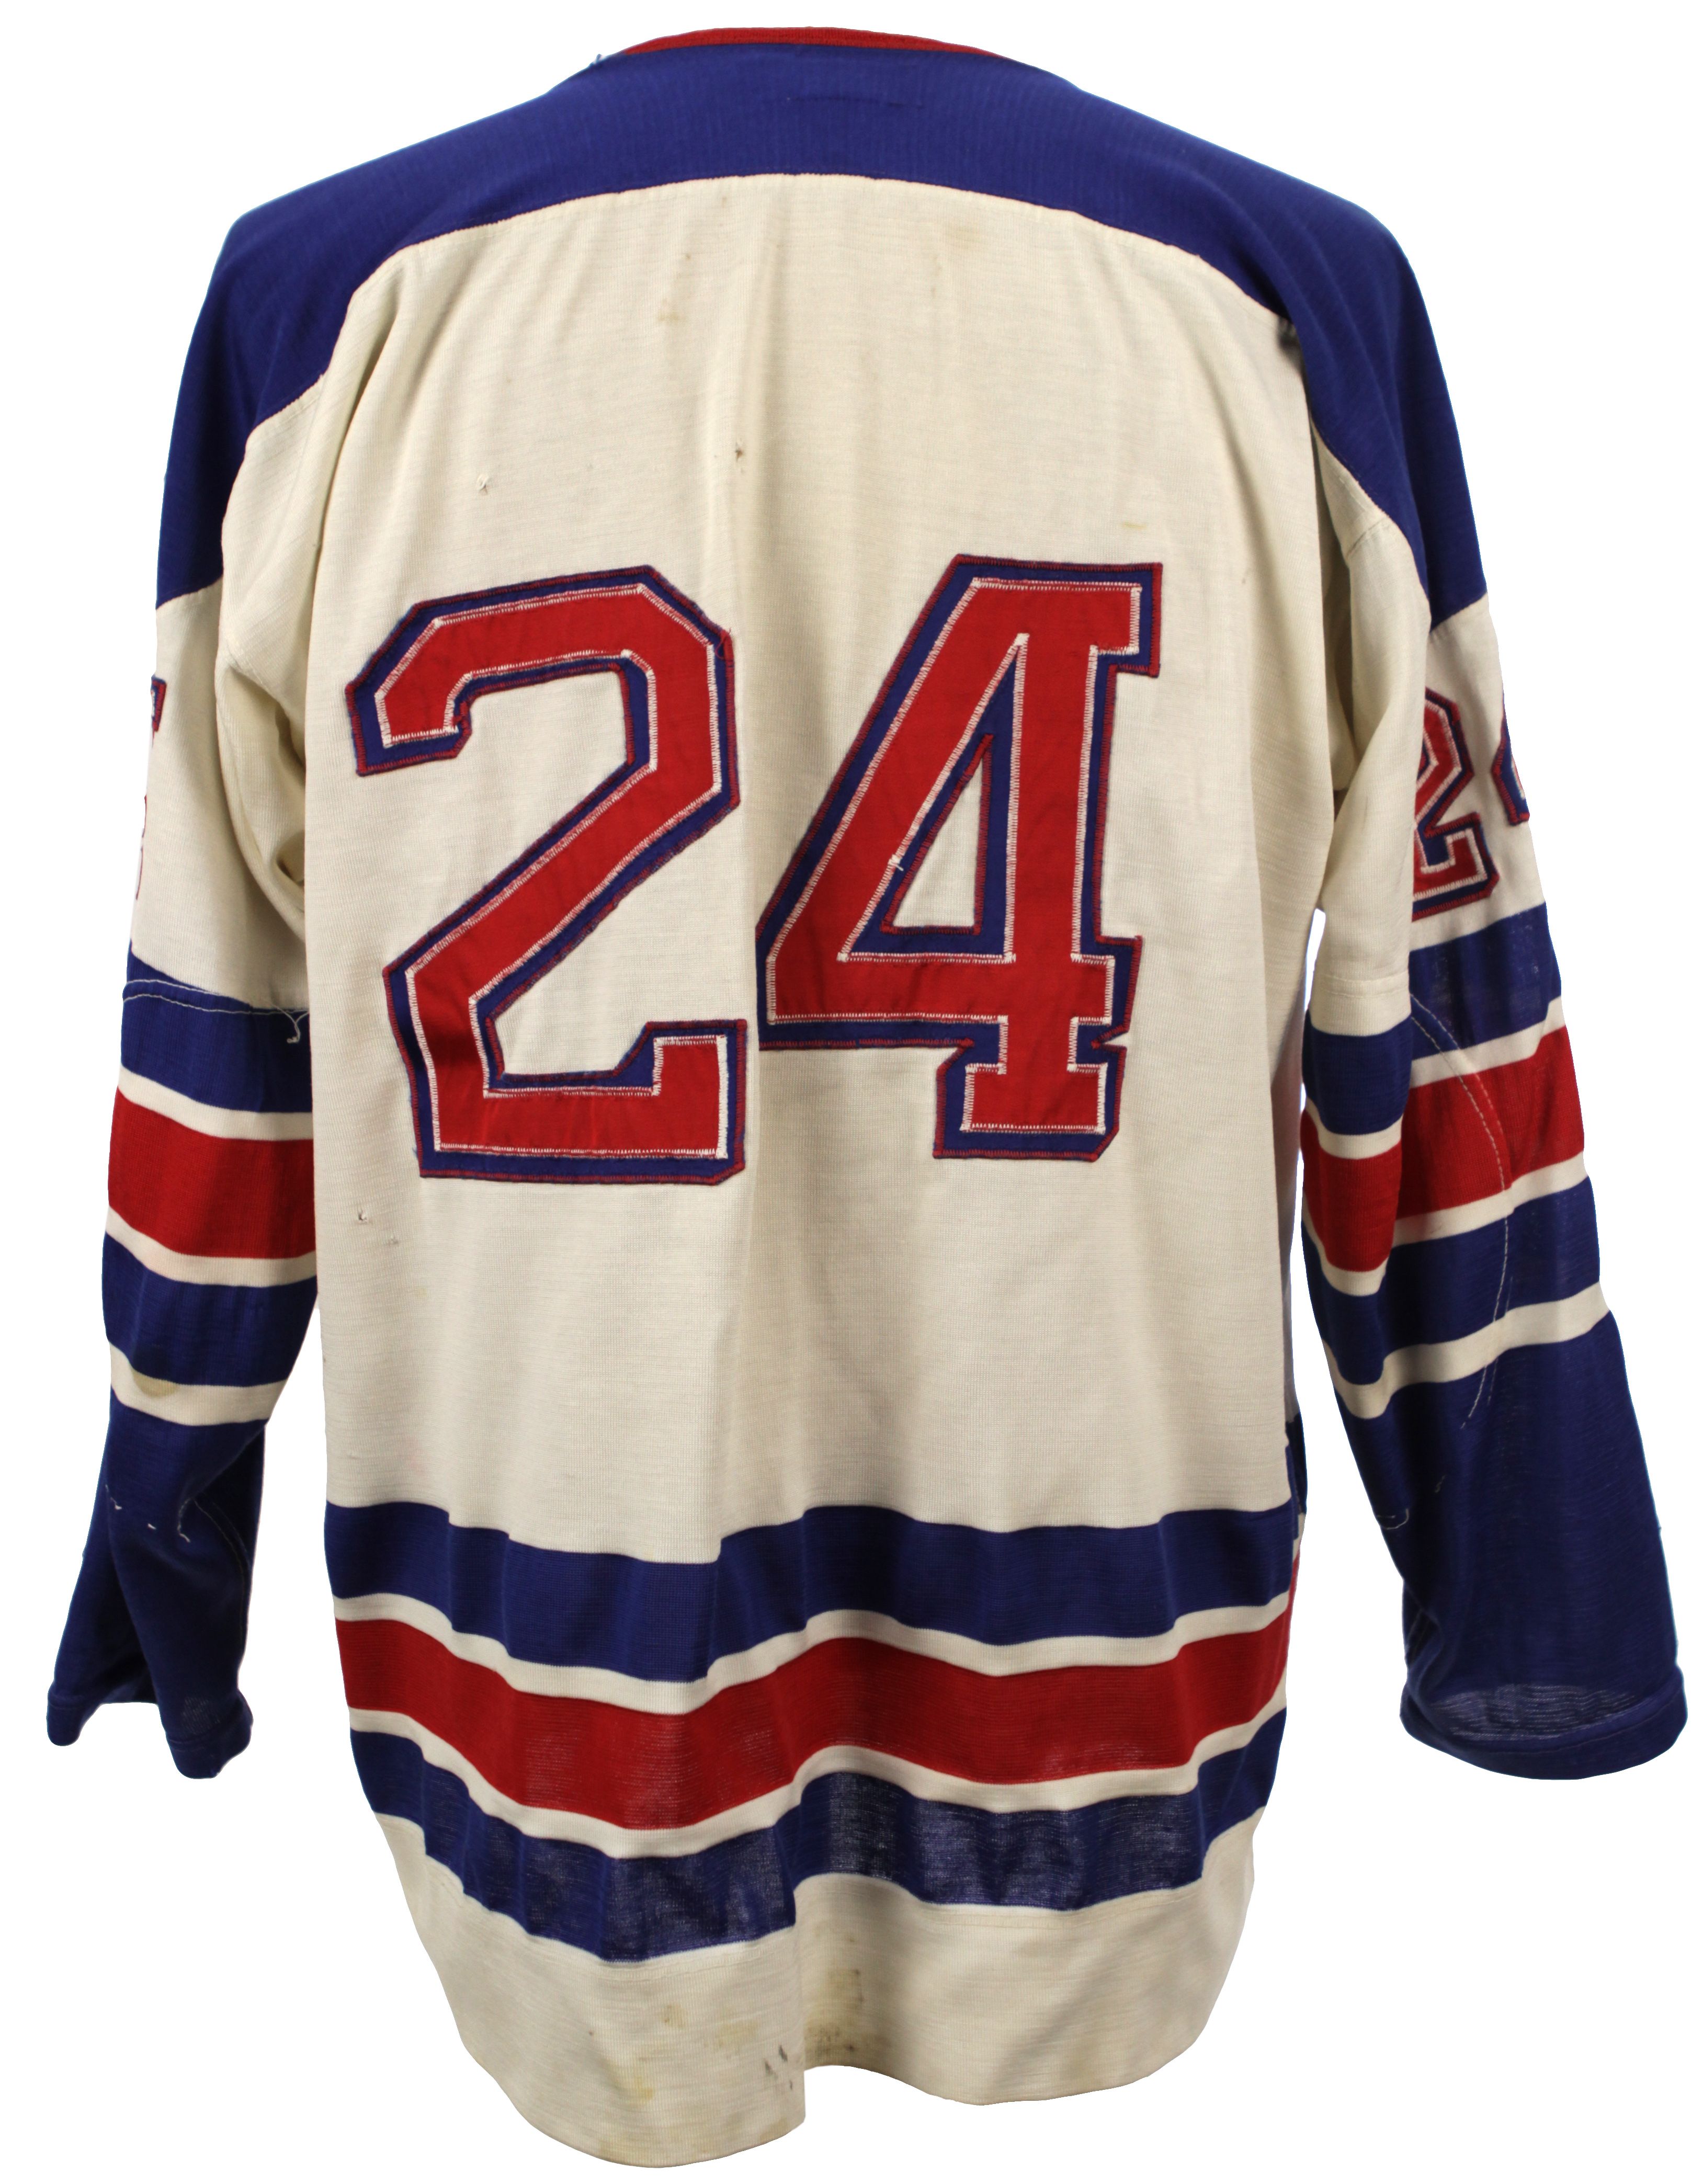 1976 usa hockey jersey